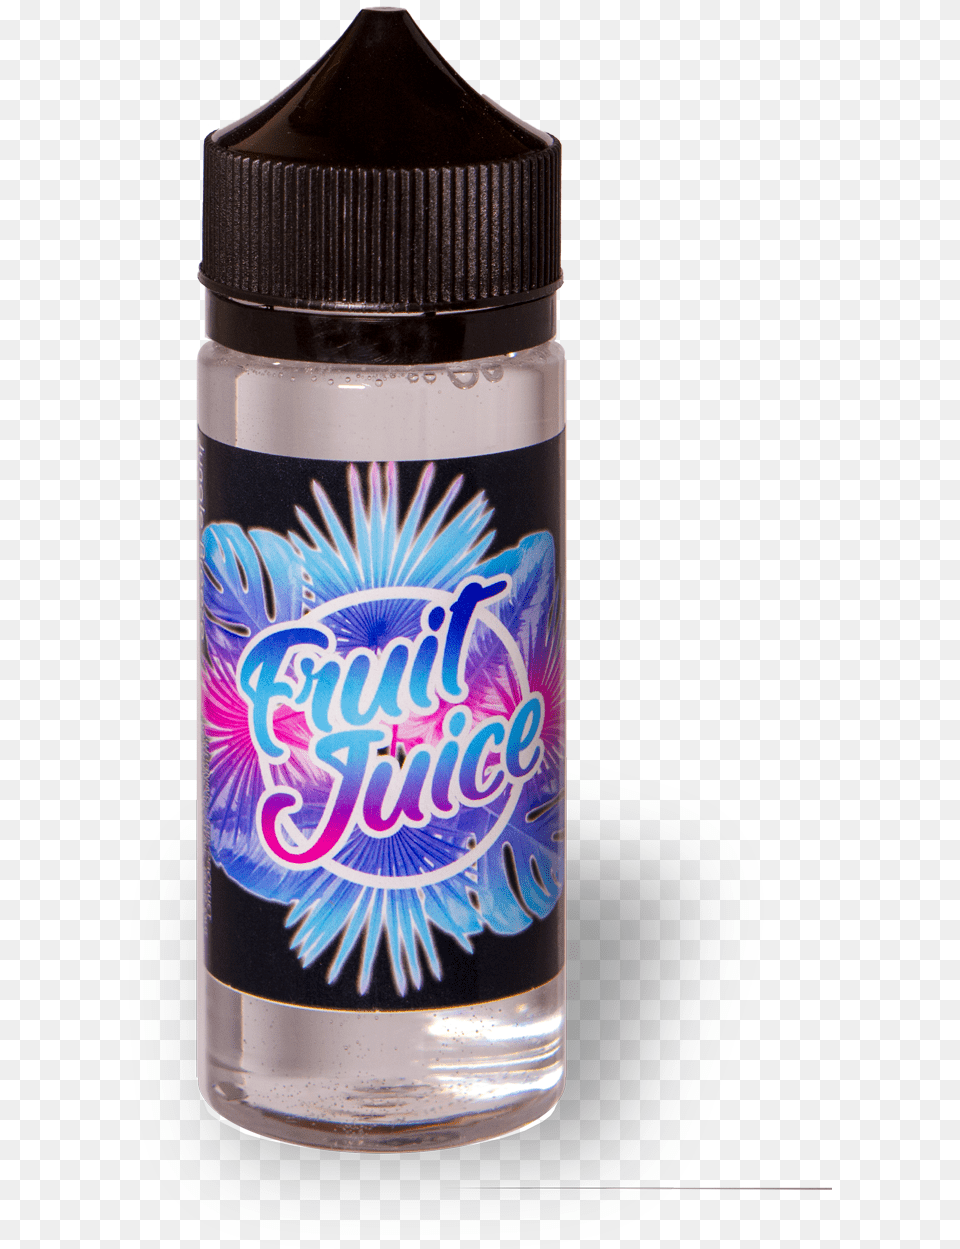 Bottle Of Vader Vape Distro S E Liquid Flavor Bottle Of Juice Vape, Cosmetics, Perfume Free Transparent Png